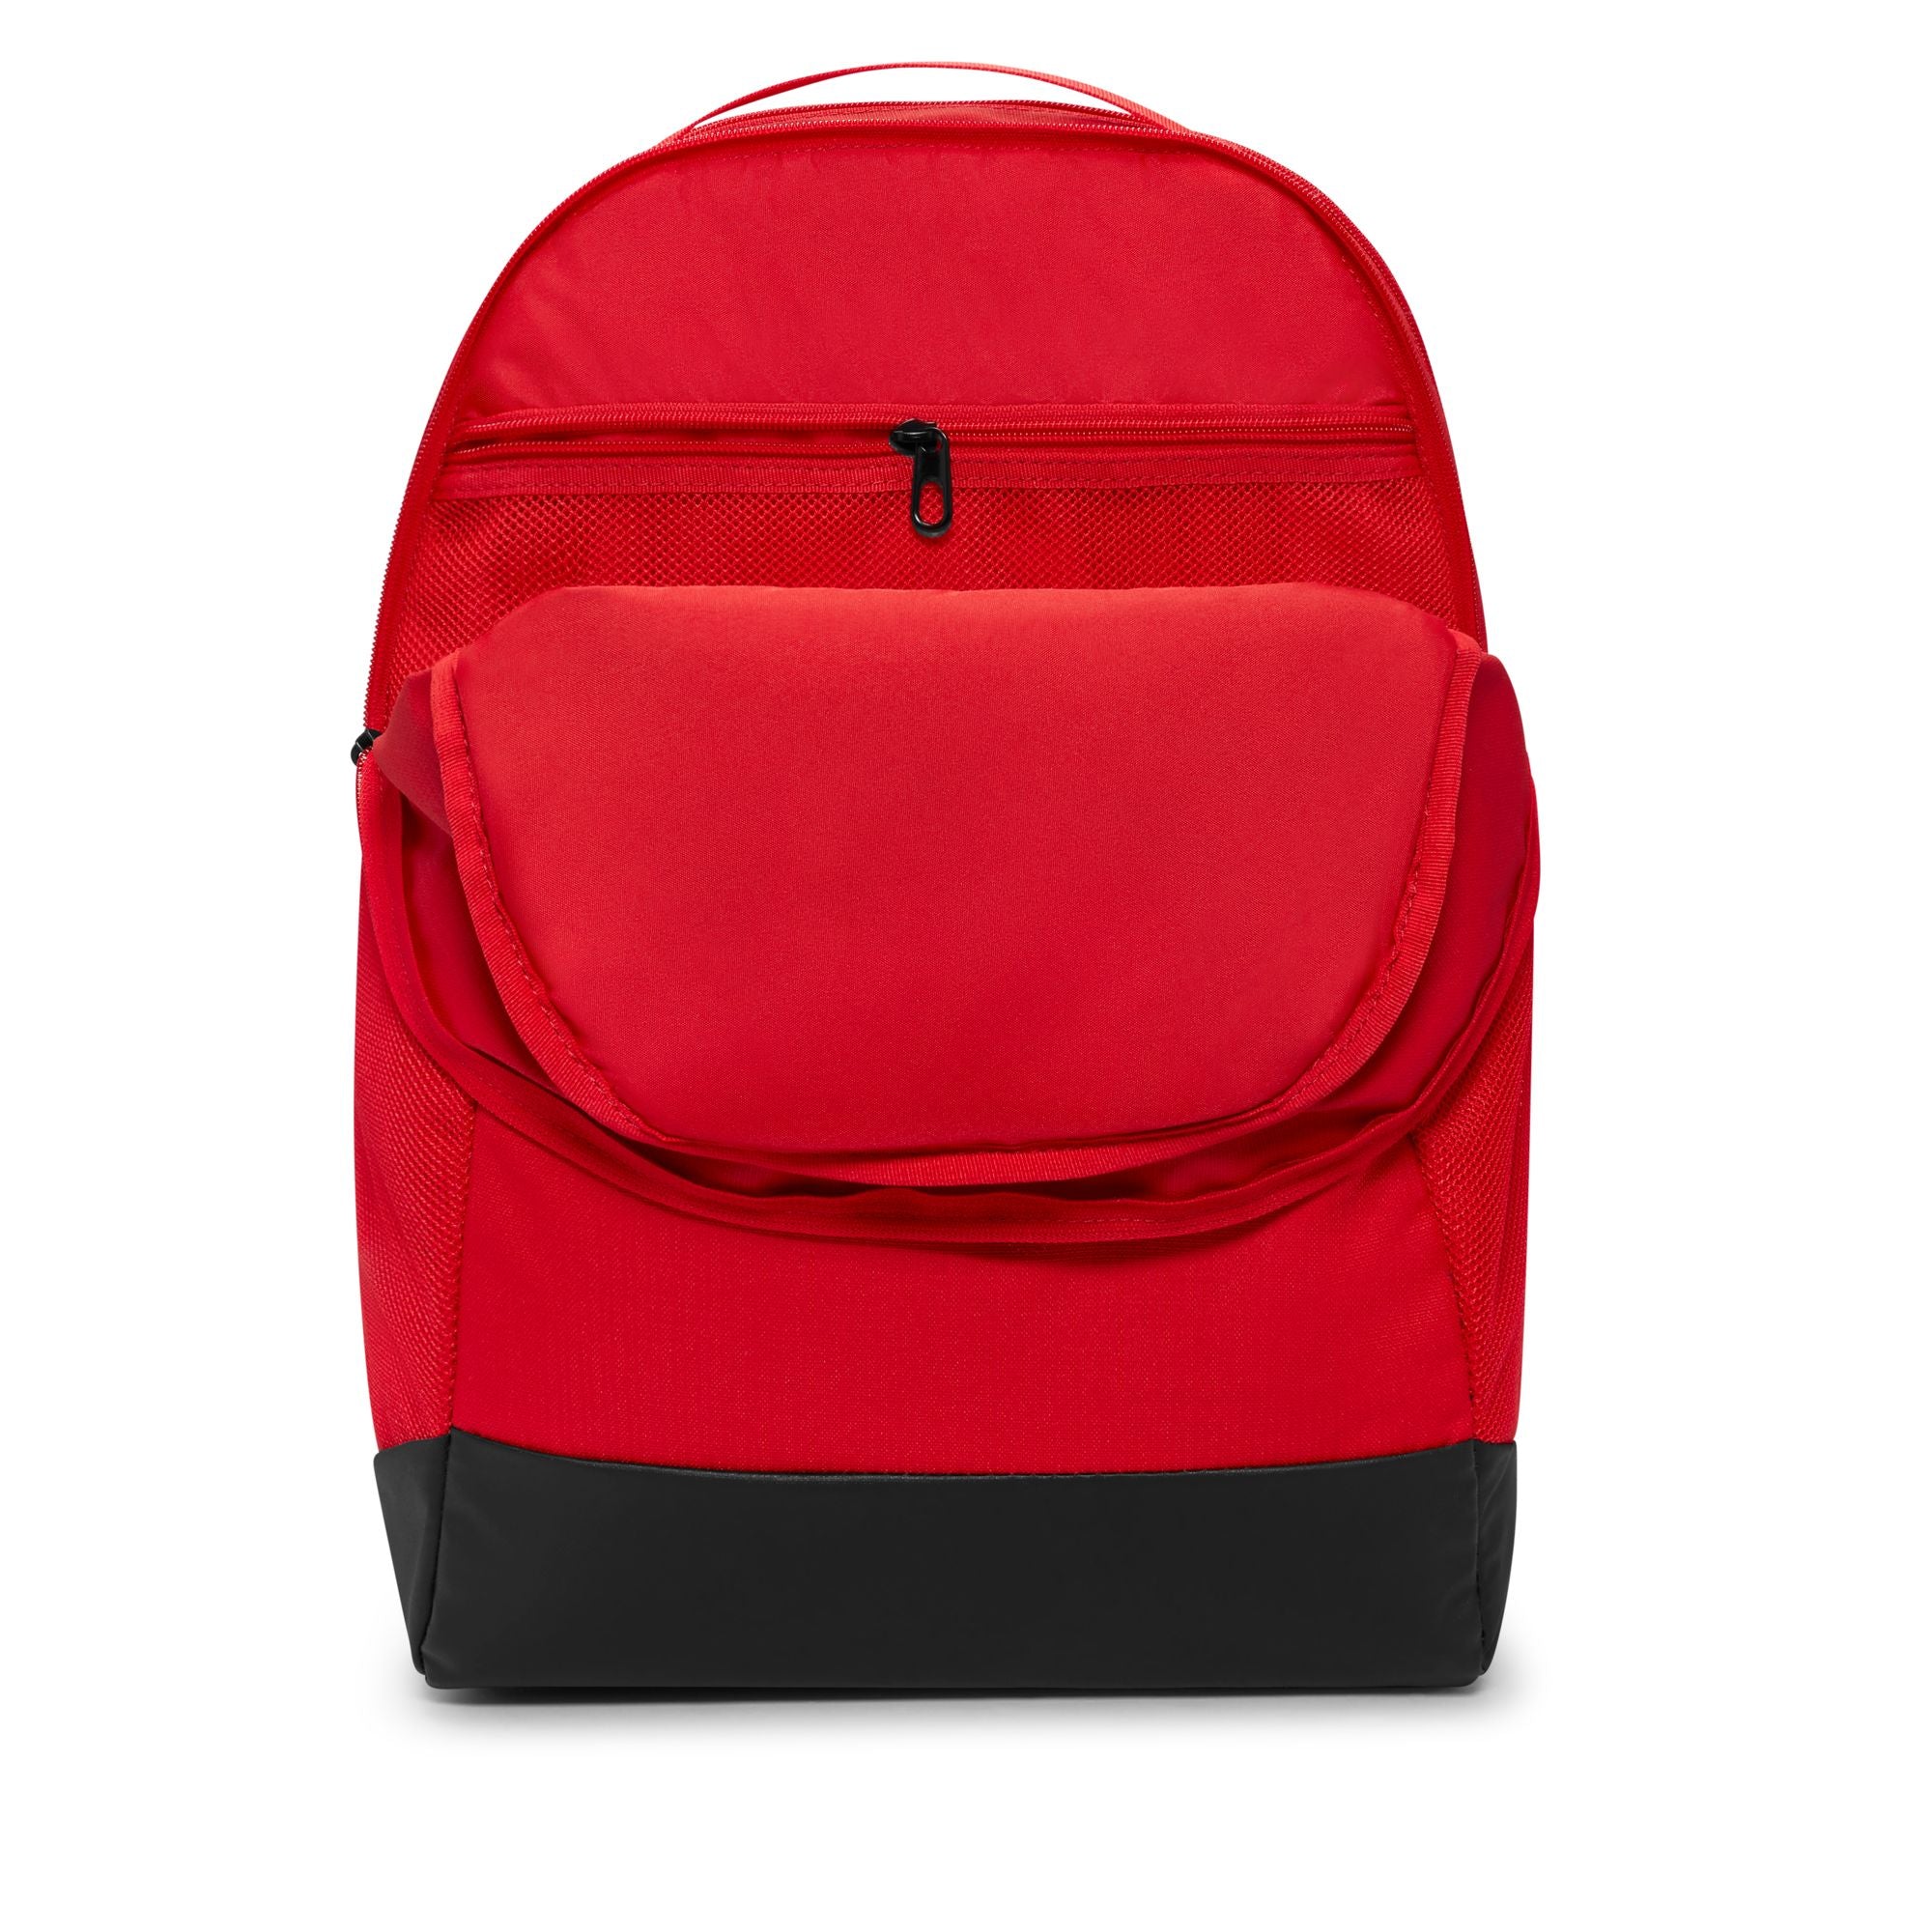 Nike Brasilia Medium 9.5 Backpack - DH7709 - Midnight